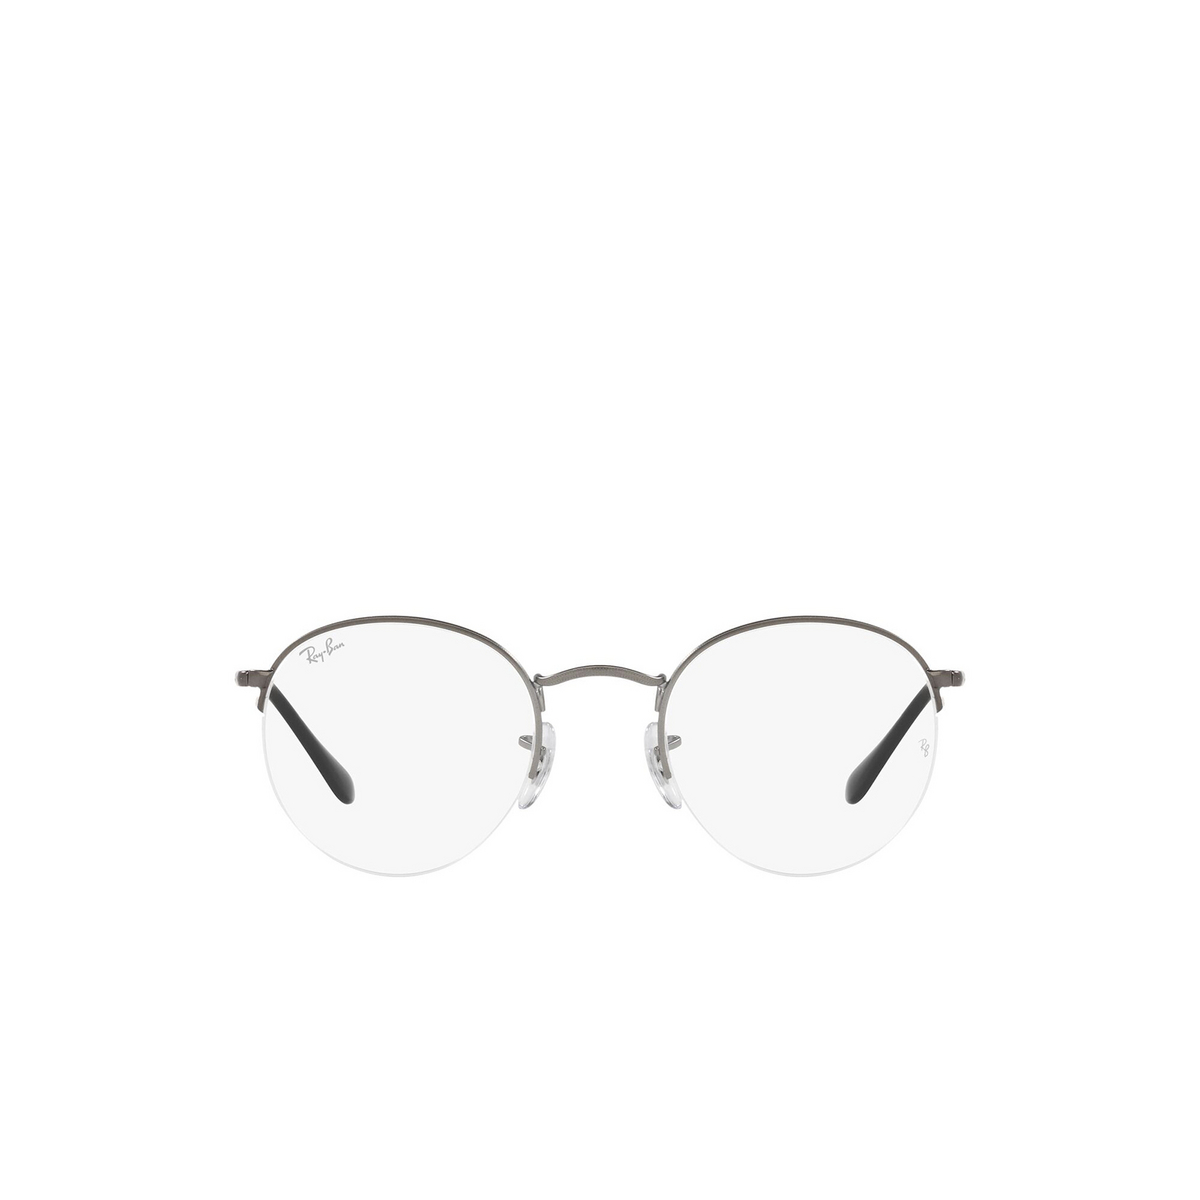 Ray-Ban ROUND GAZE Eyeglasses 2620 Matte Gunmetal - front view